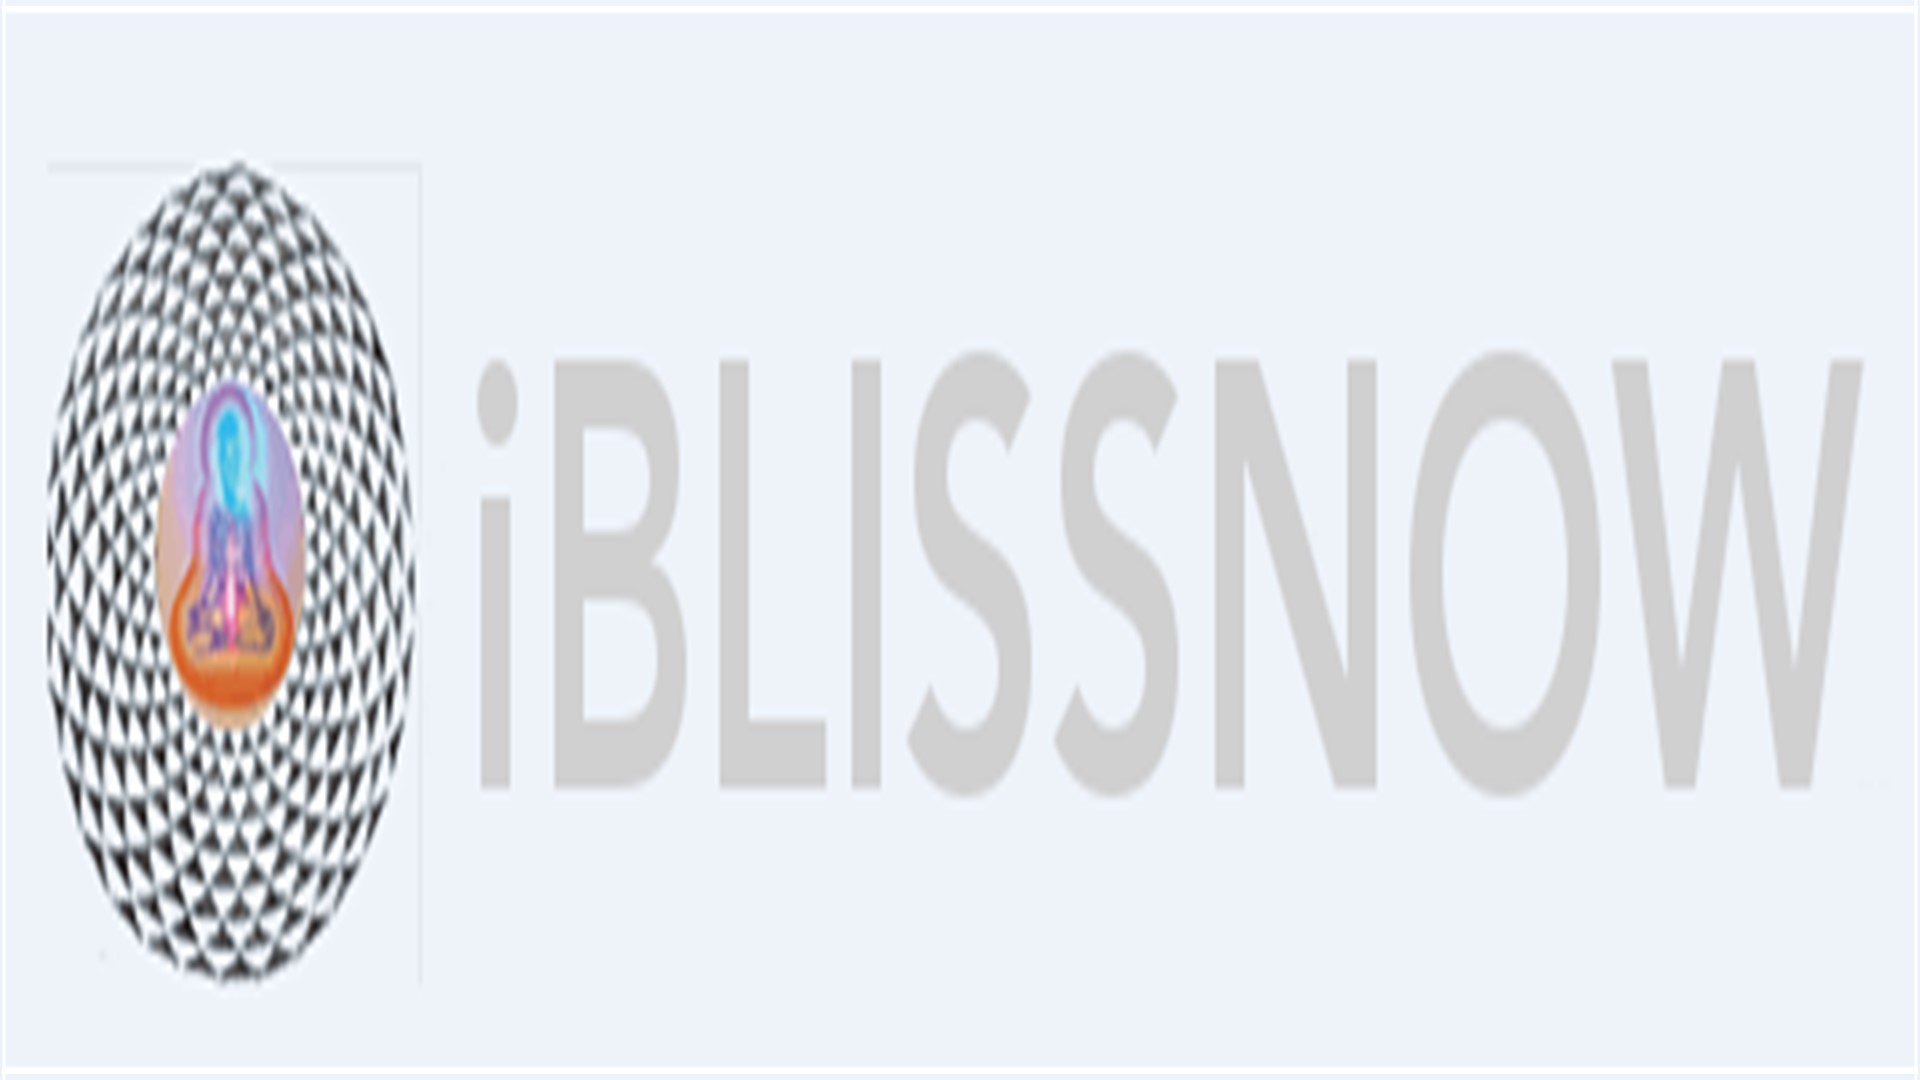 iBlissnow LLC